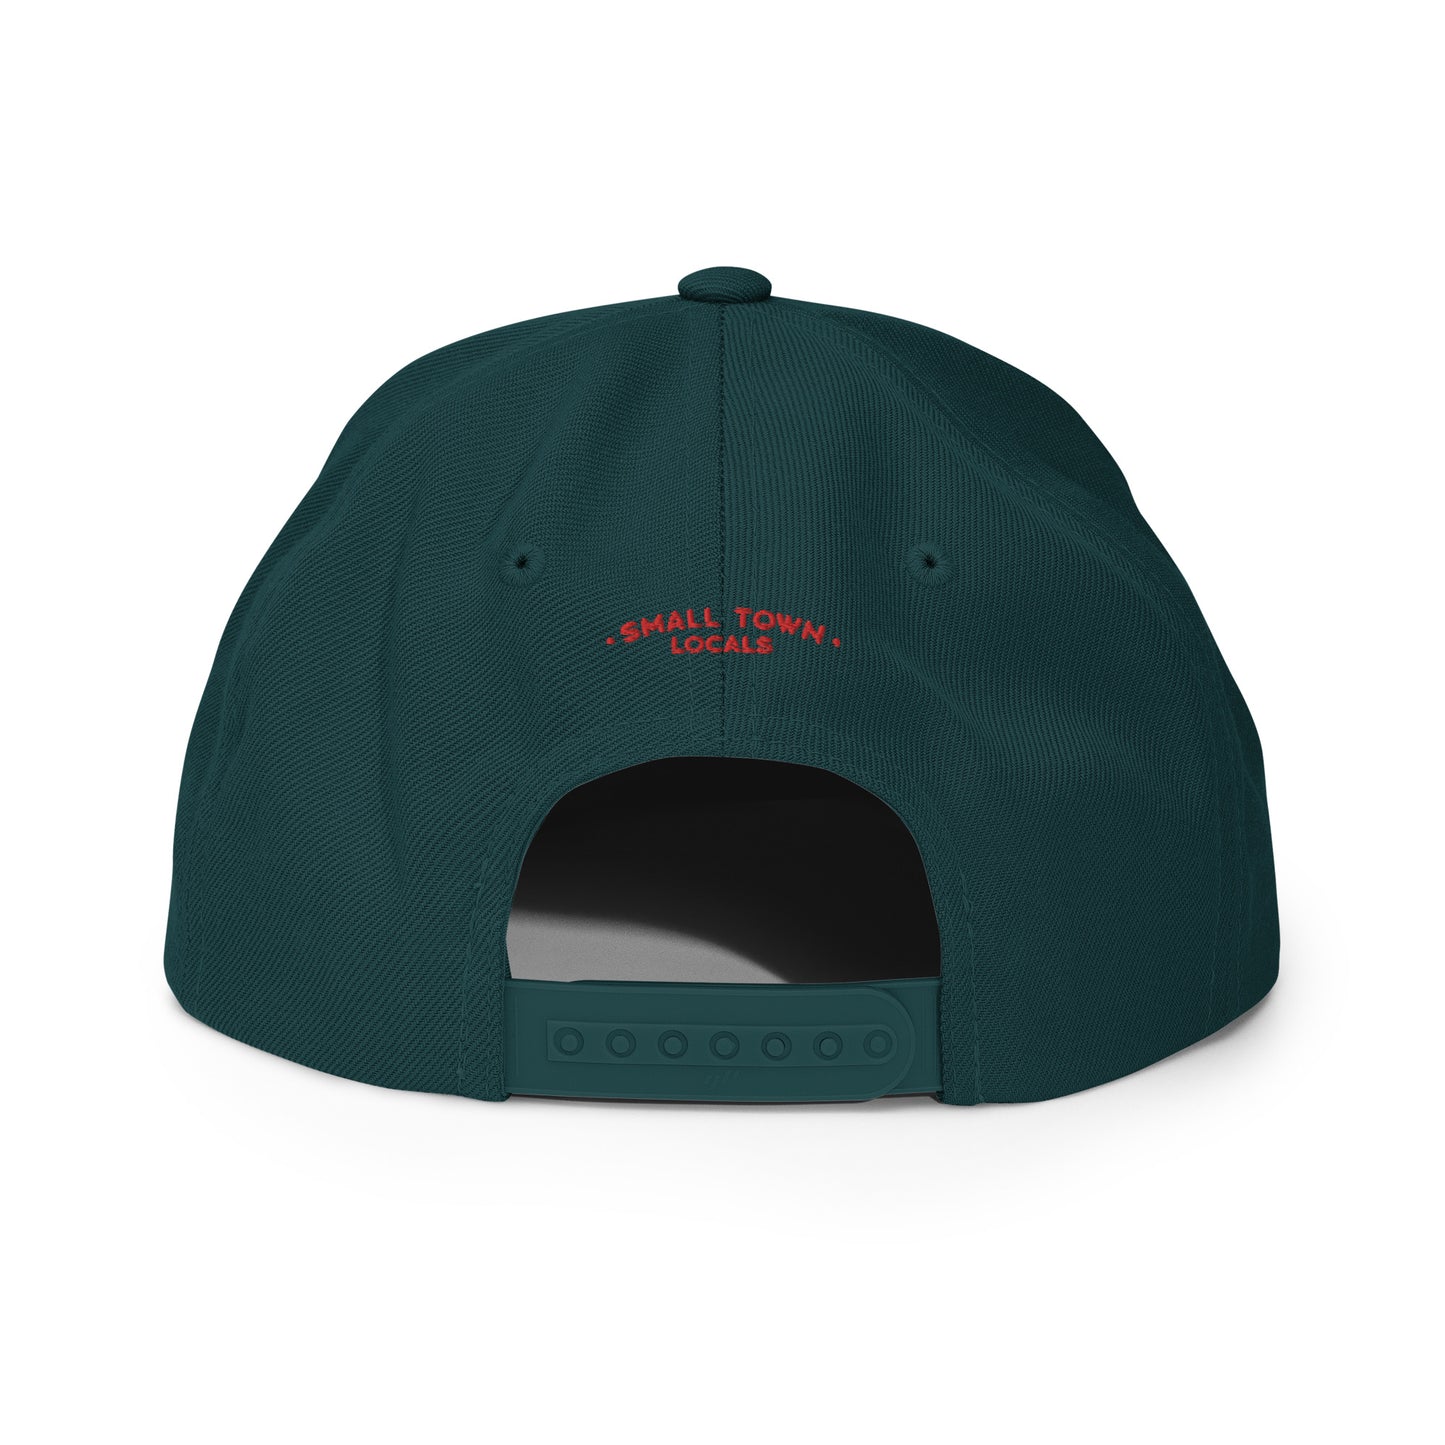 Mr. Berry - Deluxe Snapback Hat